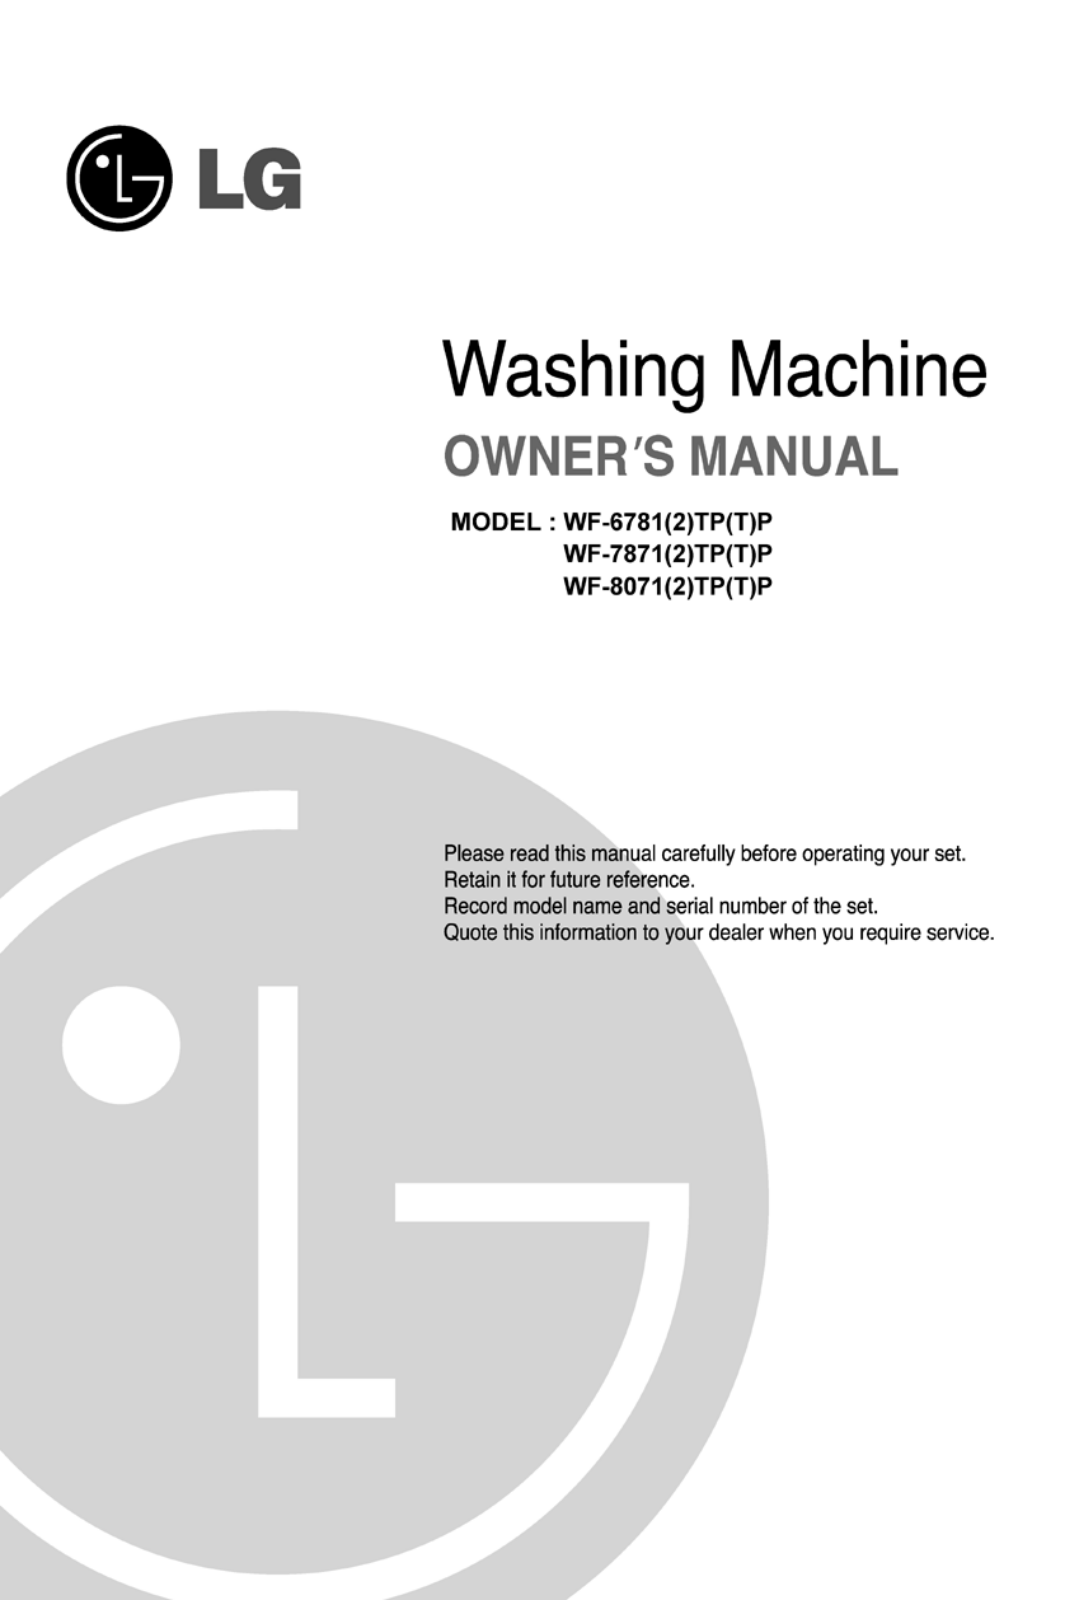 LG WF-7871TTP Manual